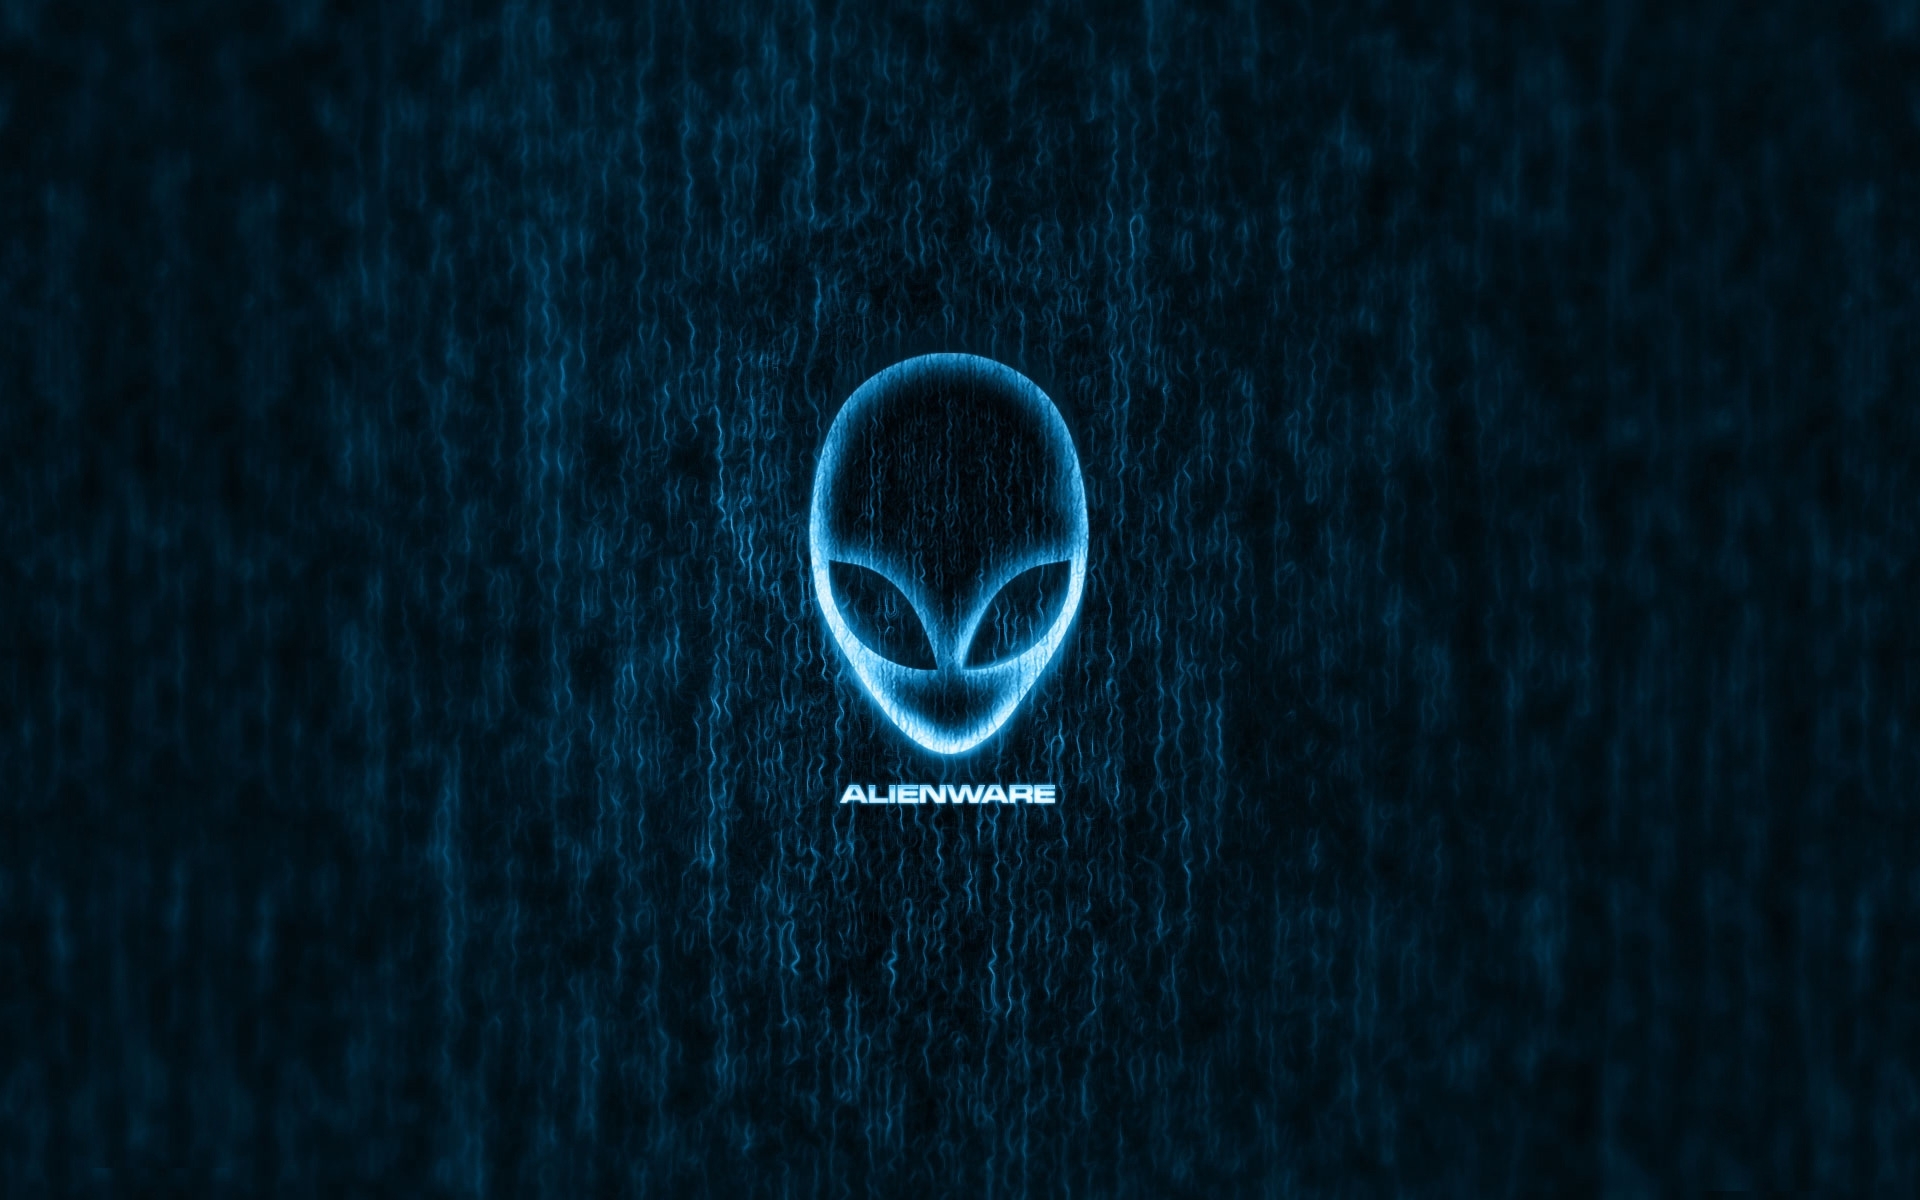 Wallpapers alienware aliens company on the desktop